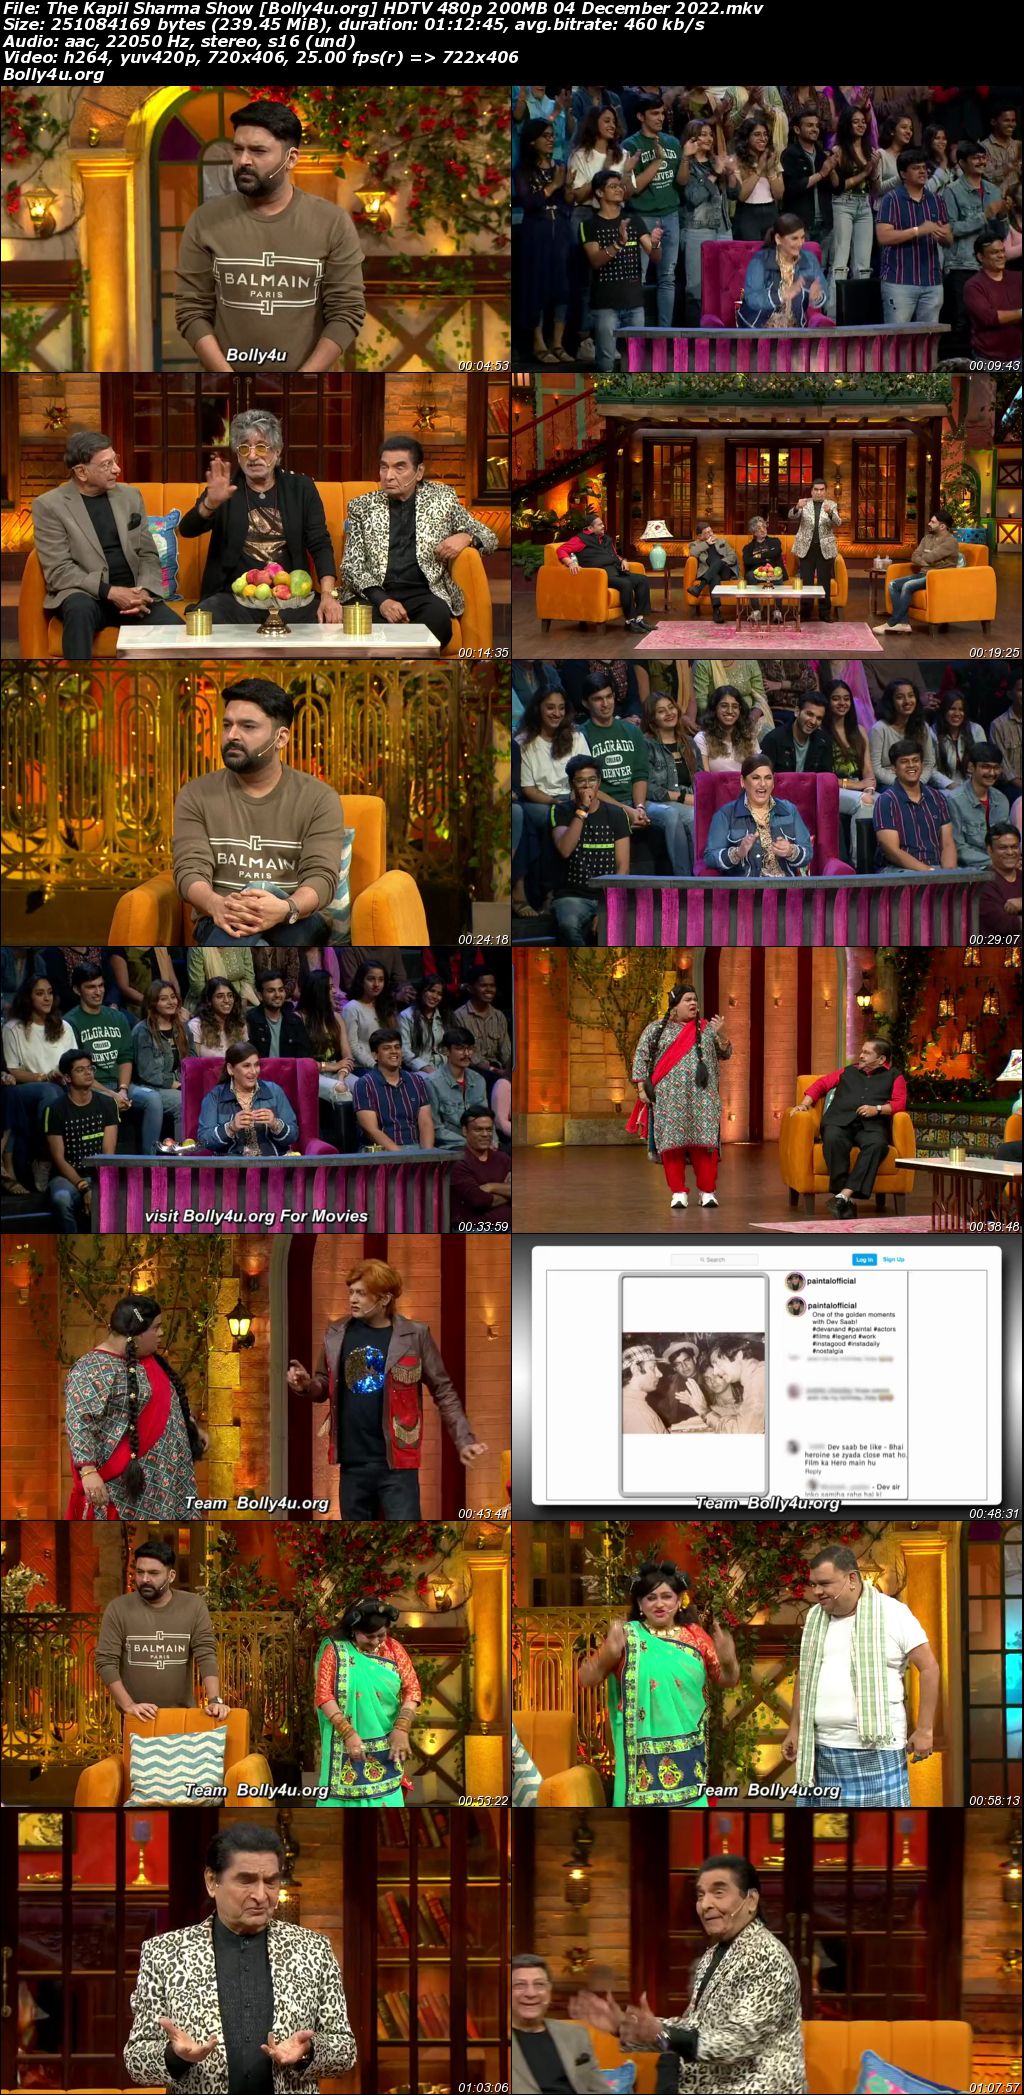 The Kapil Sharma Show HDTV 480p 200MB 04 December 2022 Download